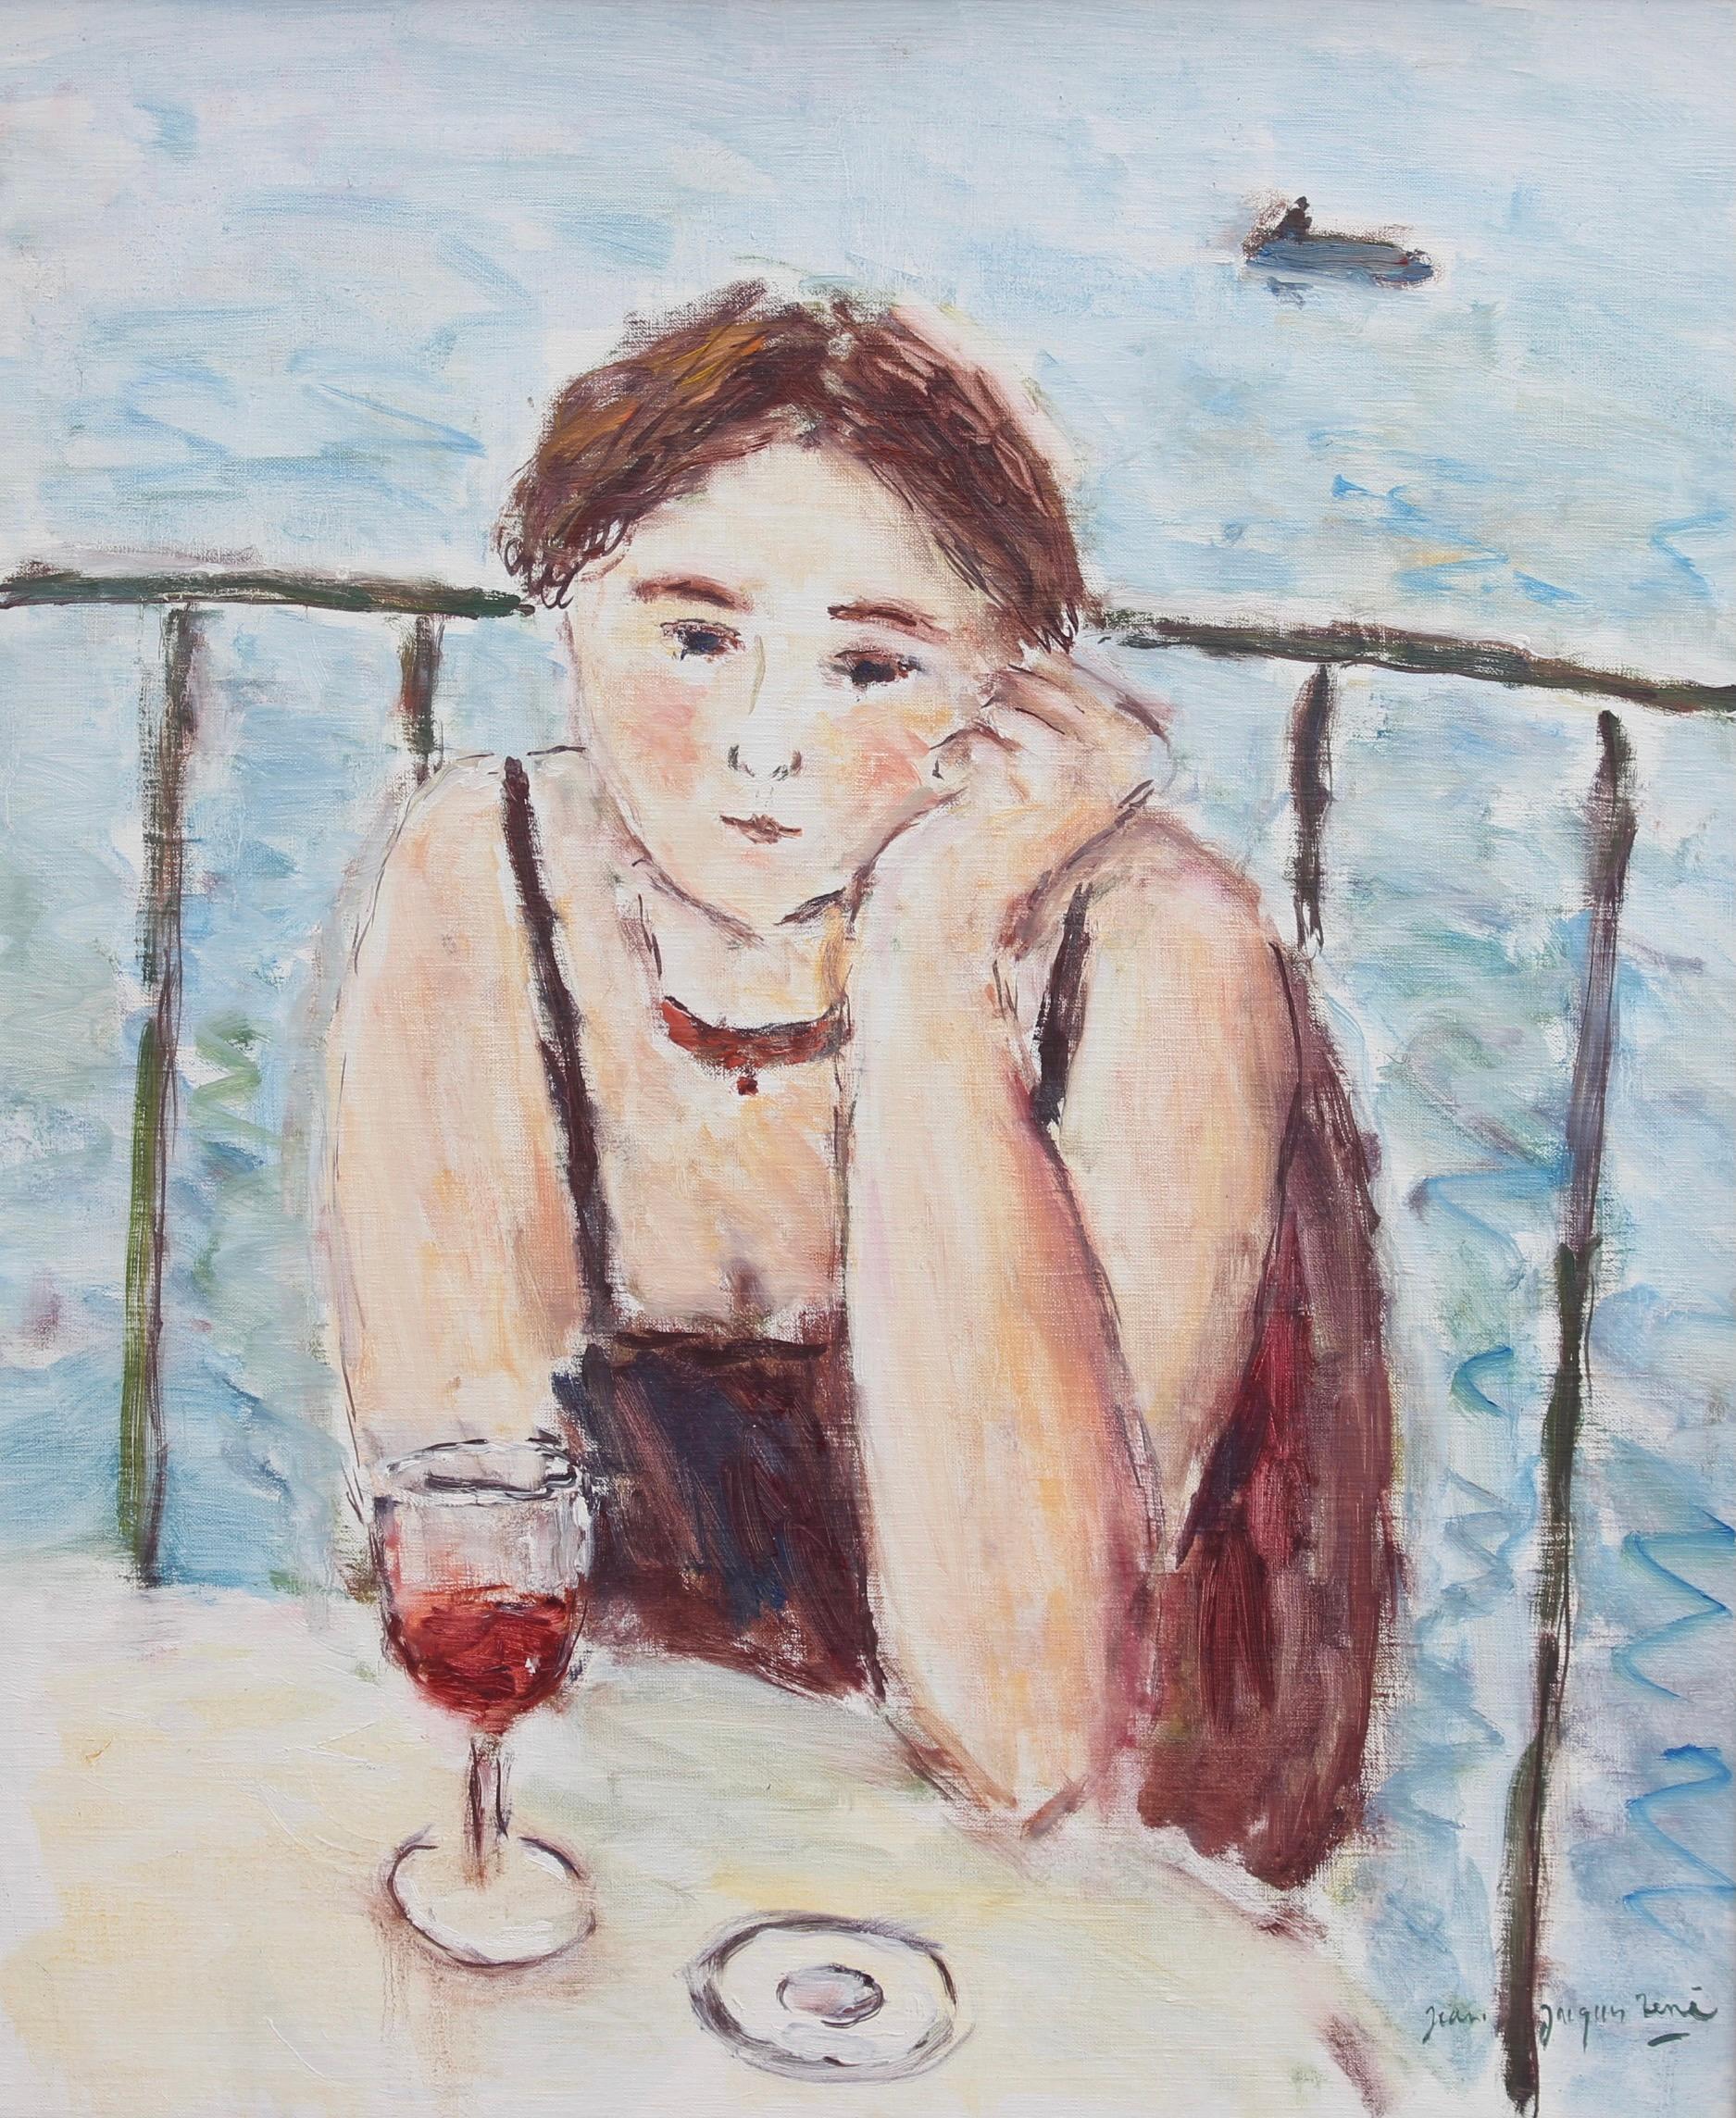 Seaside-Terrasse – Painting von JEAN-JACQUES RENE (b.1943) 